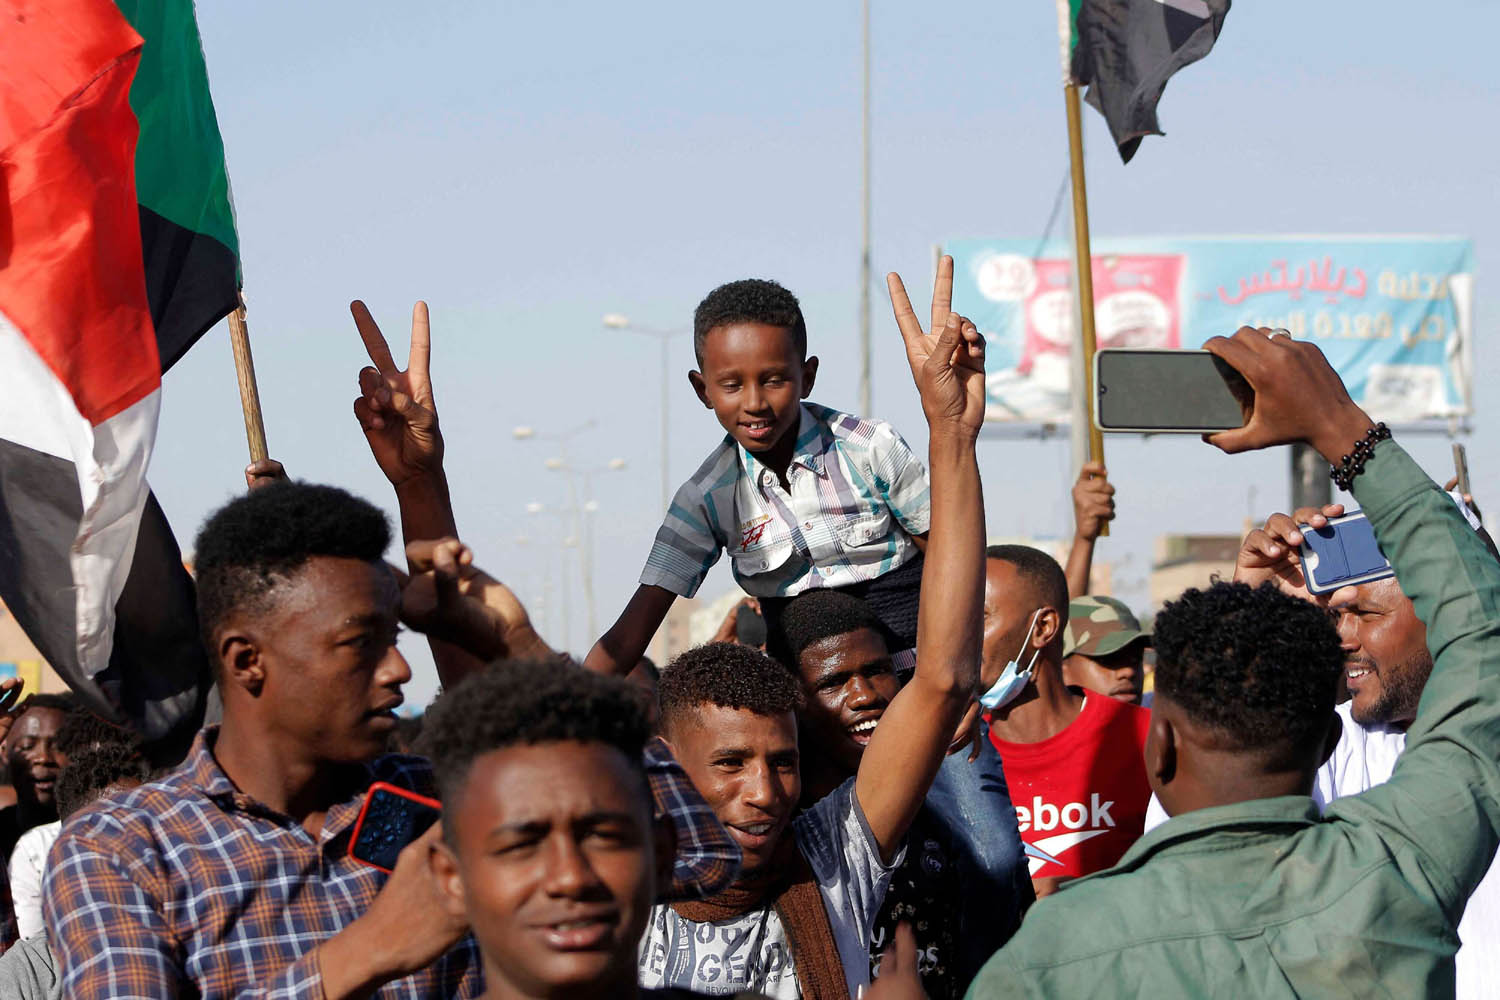 متظاهرون سودانيون وسط الخرطوم